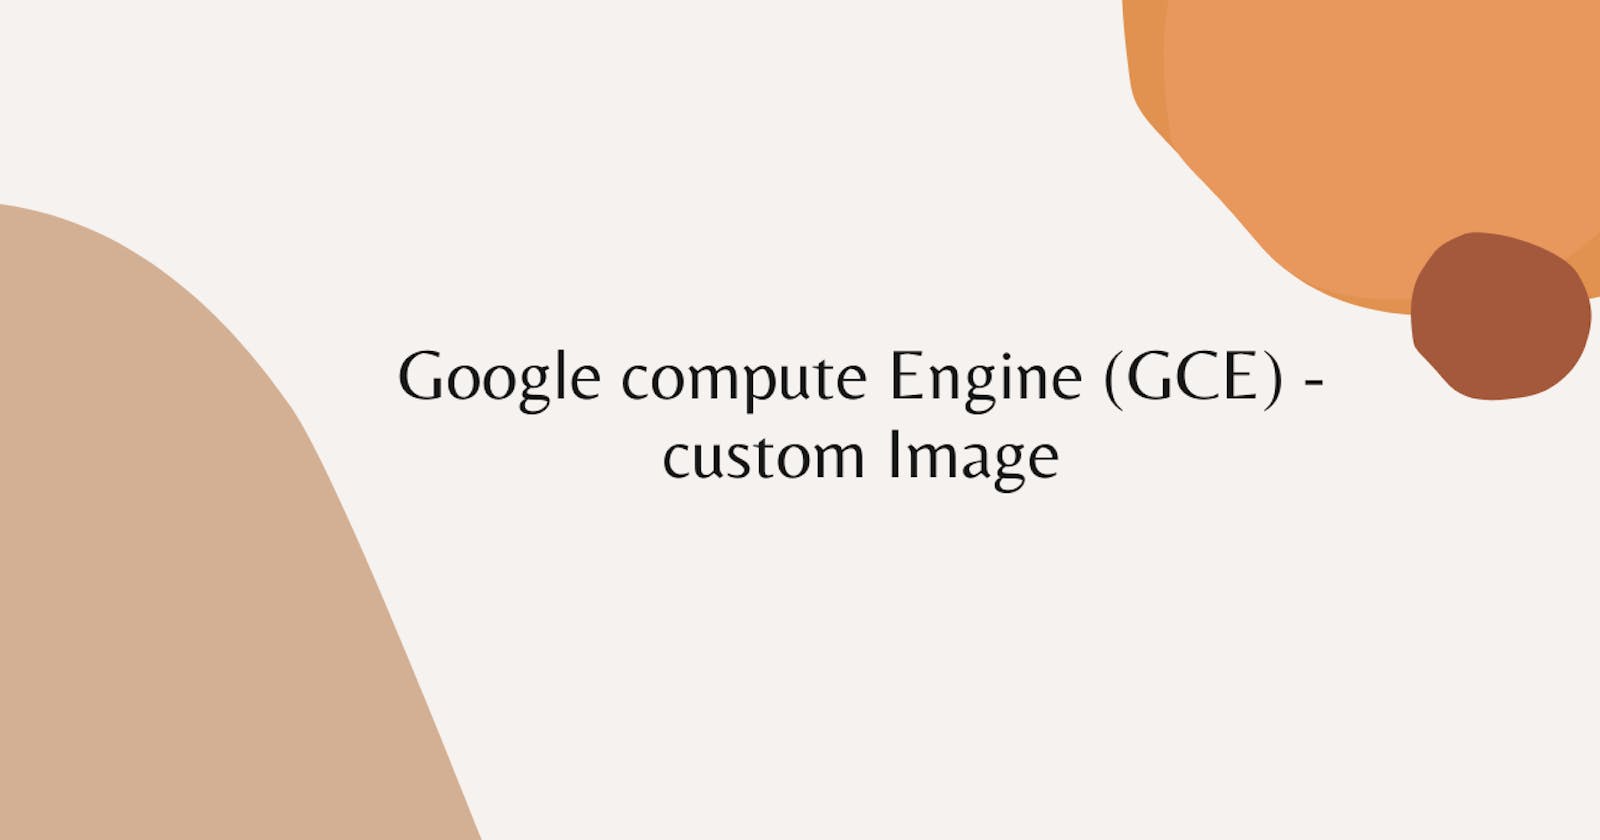 Google compute Engine (GCE) - custom Image